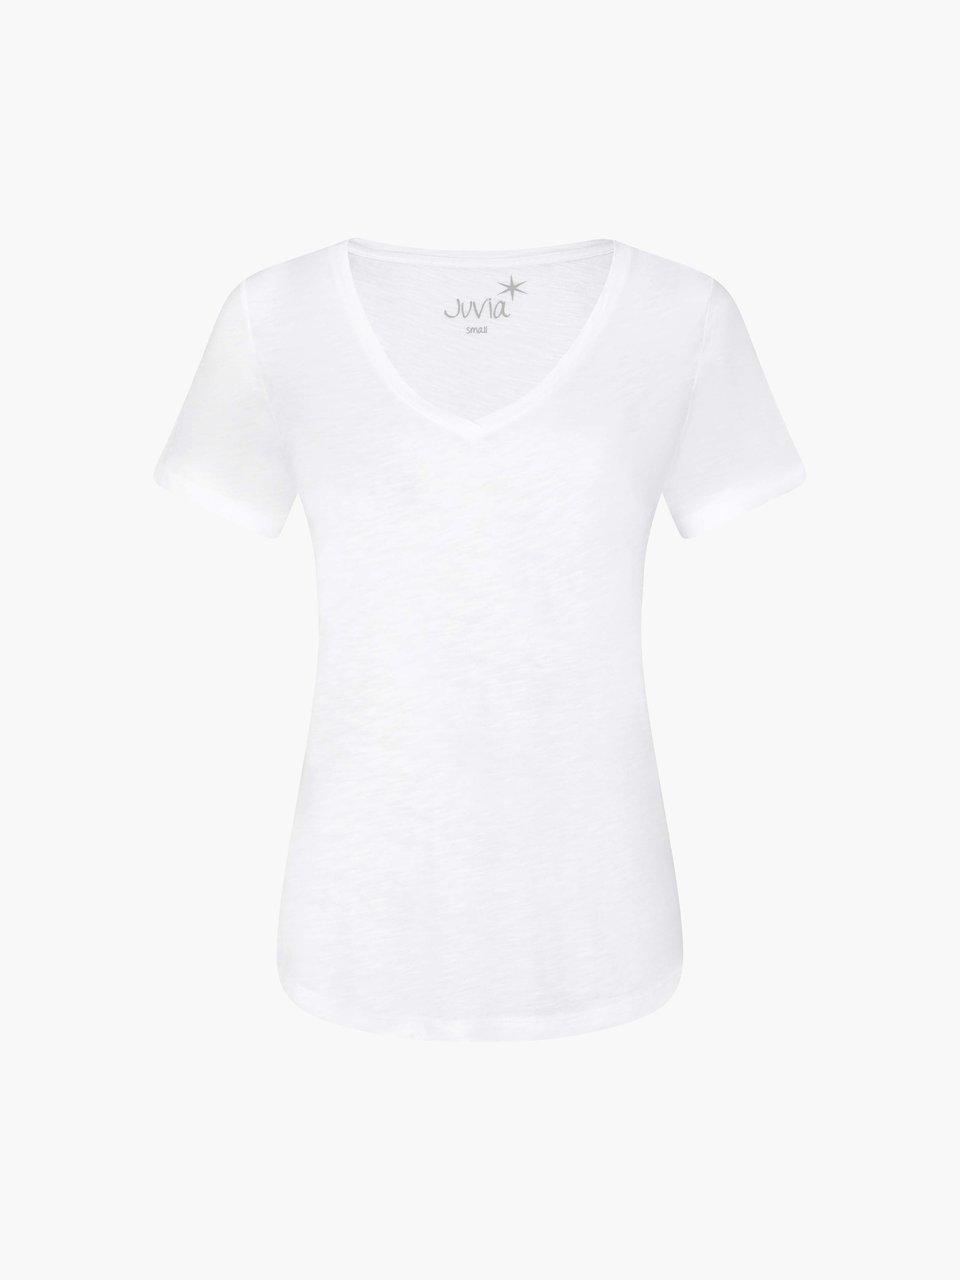 Le T-shirt manches courtes  Juvia blanc